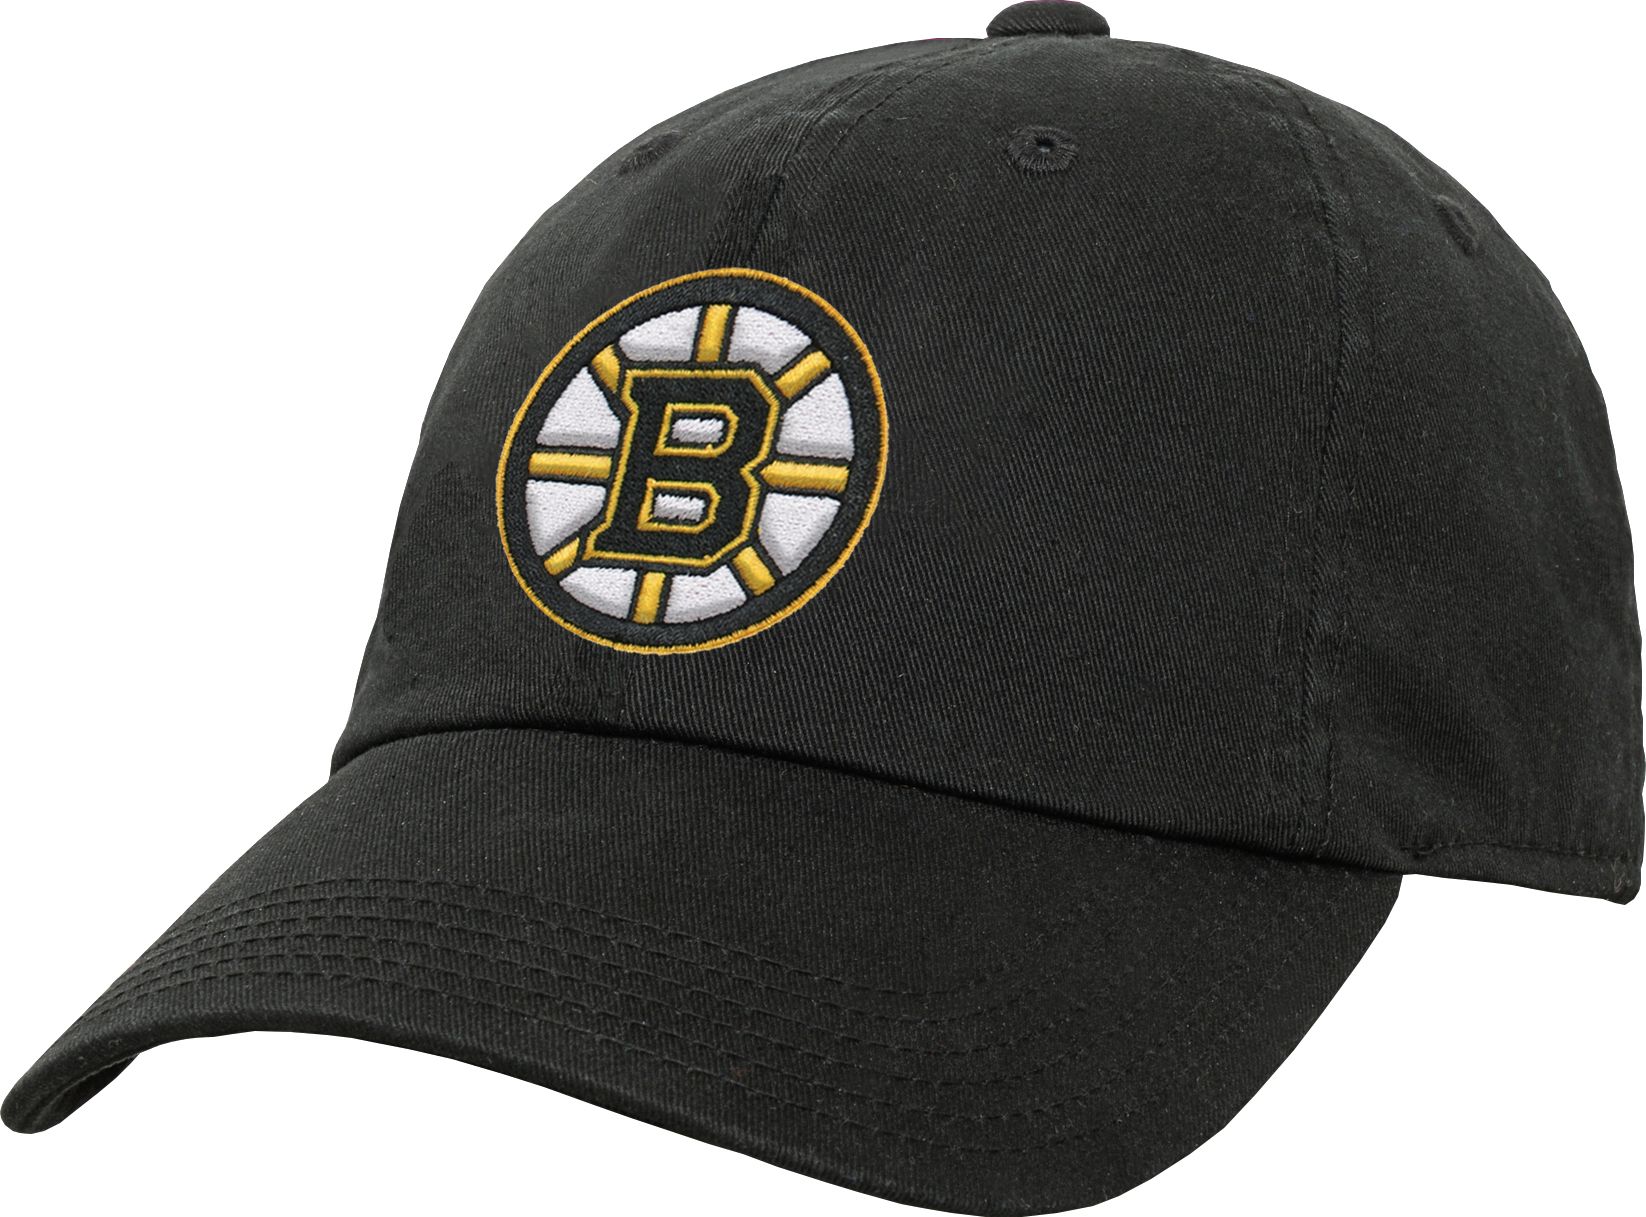 youth boston bruins hat